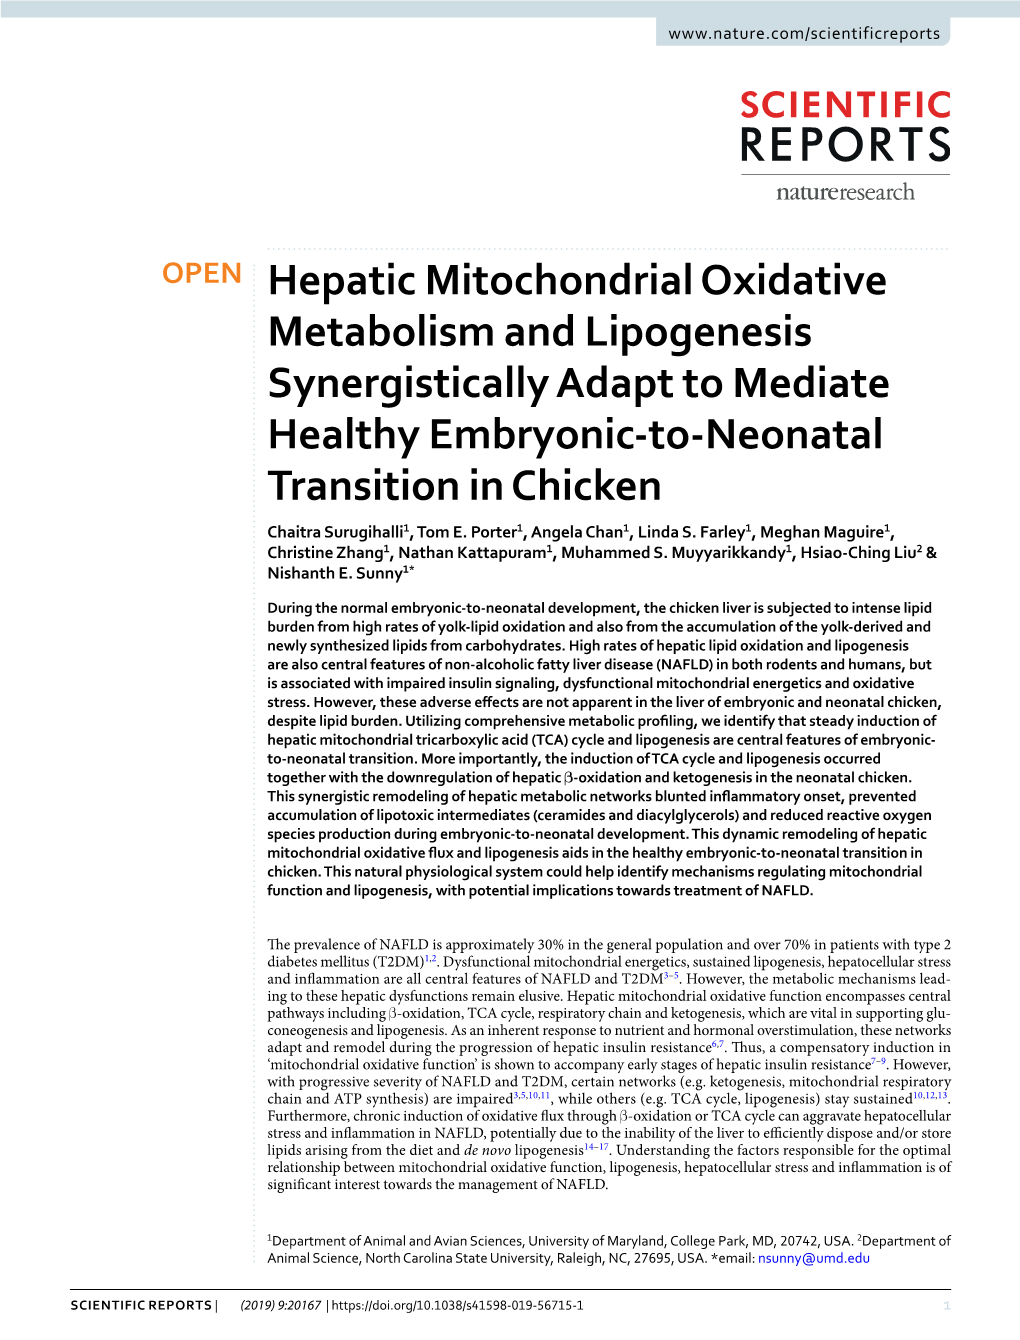 Hepatic Mitochondrial Oxidative Metabolism and Lipogenesis